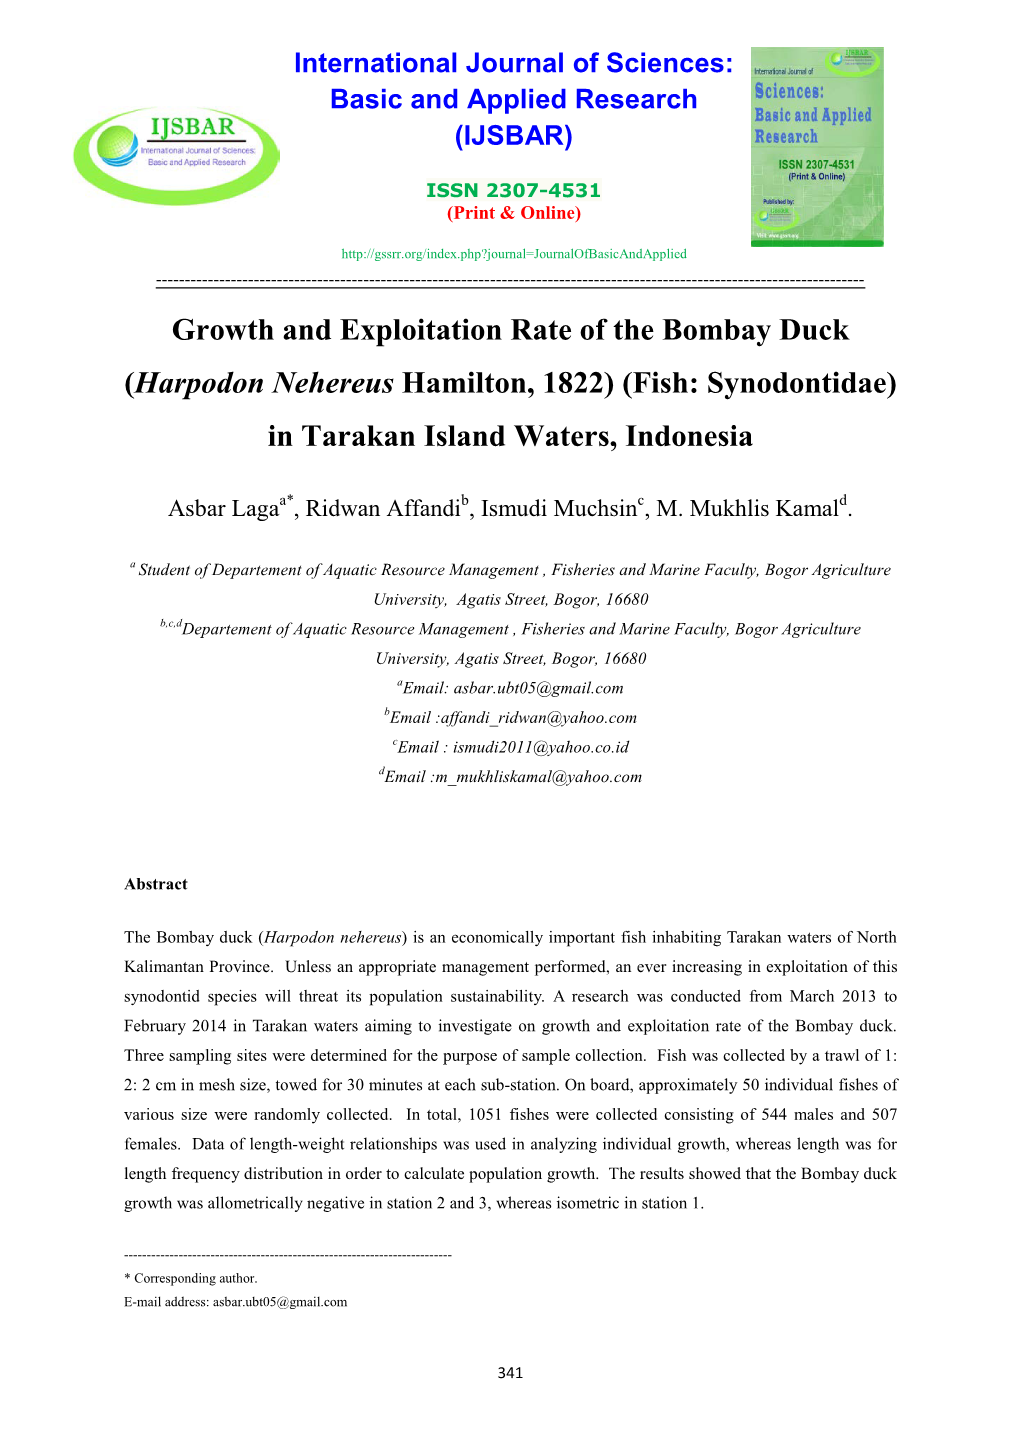 Growth and Exploitation Rate of the Bombay Duck (Harpodon Nehereus Hamilton, 1822) (Fish: Synodontidae) in Tarakan Island Waters, Indonesia